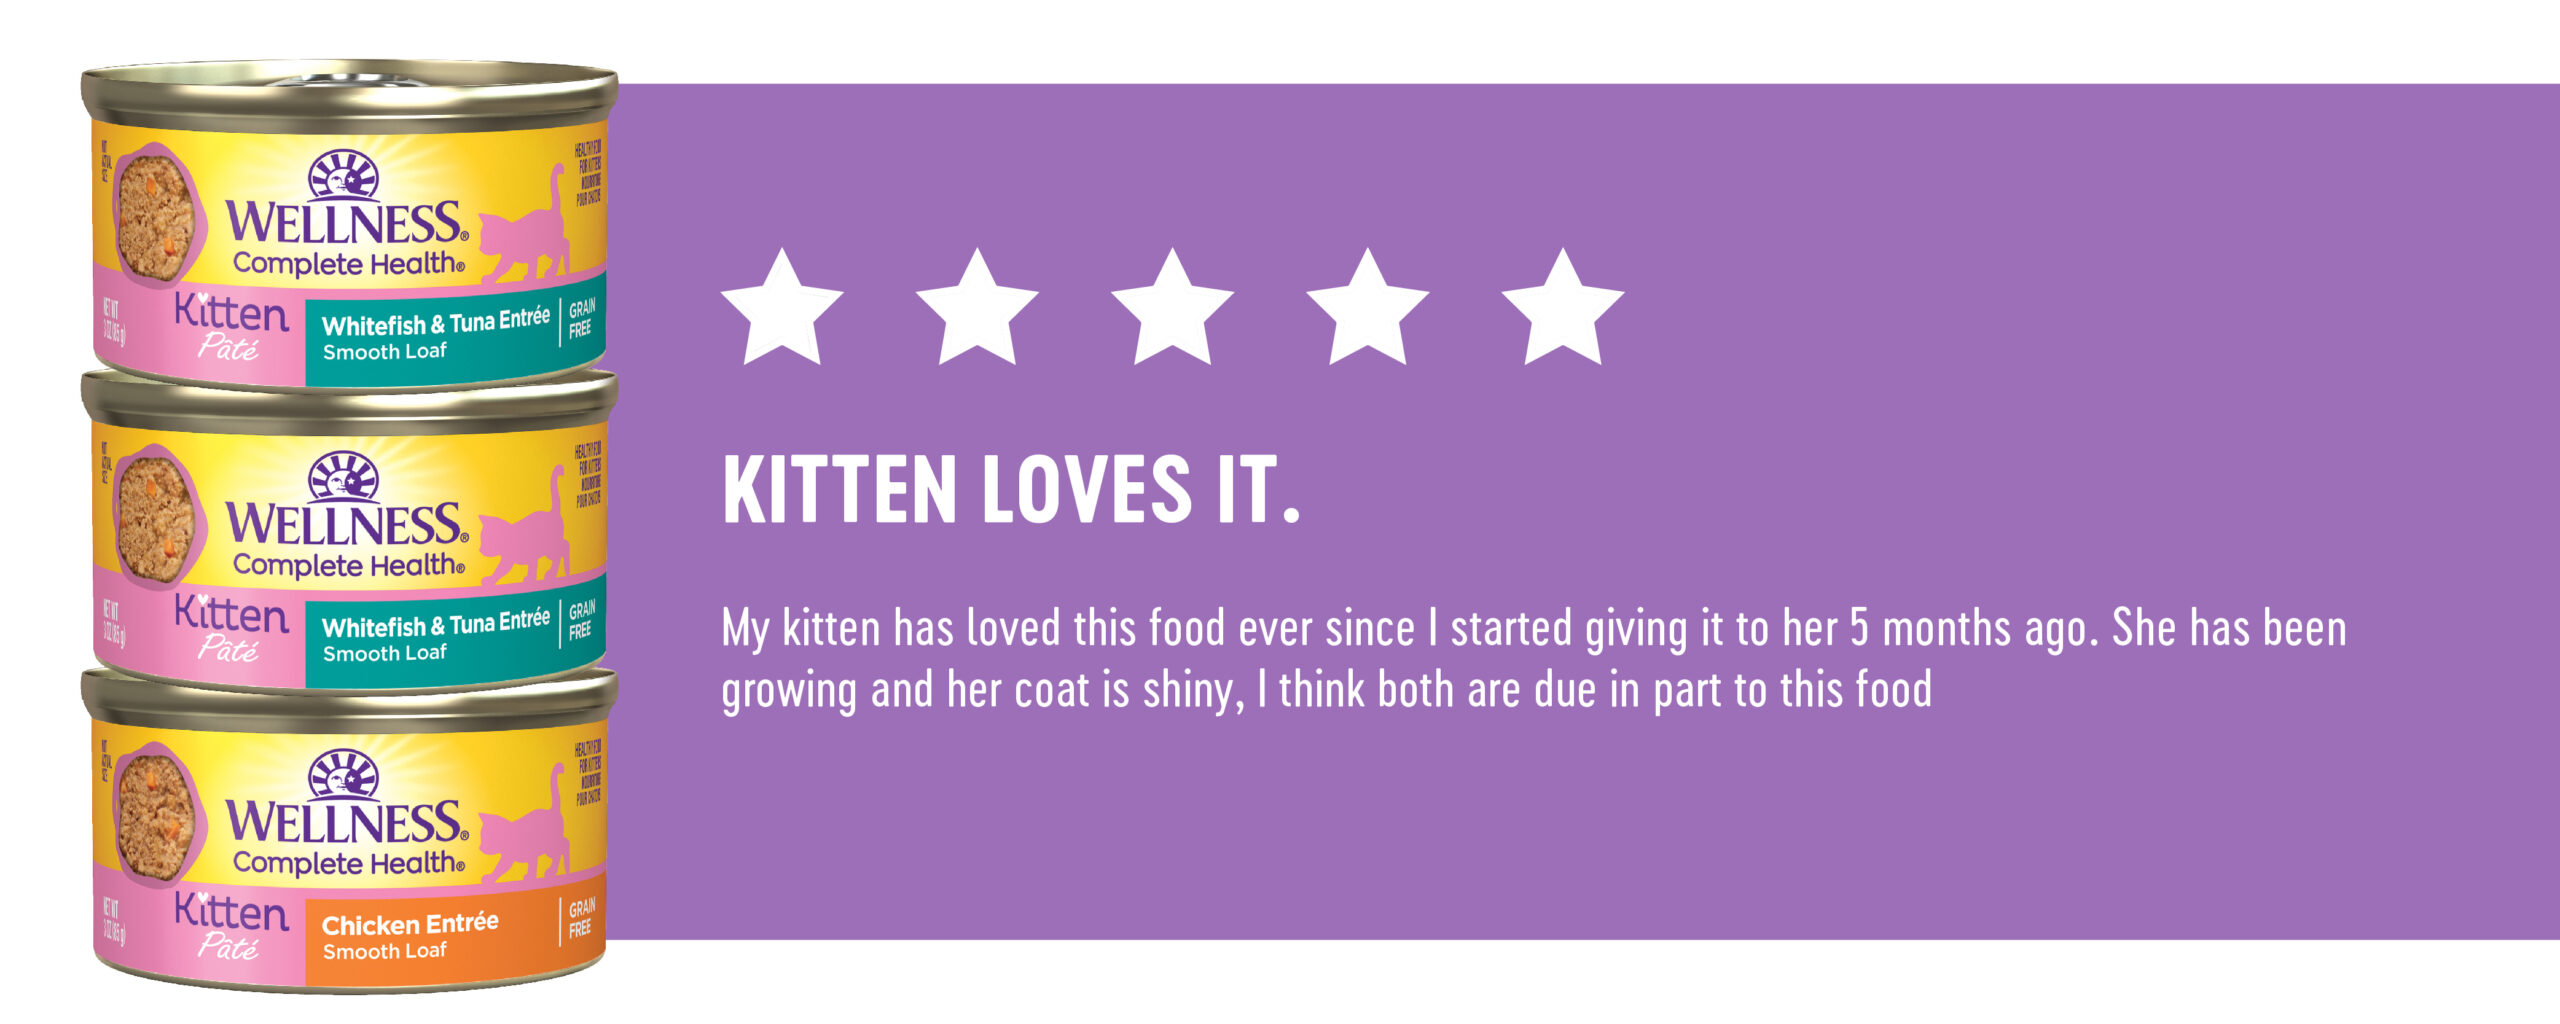 5 Stars - Kitten Loves It.